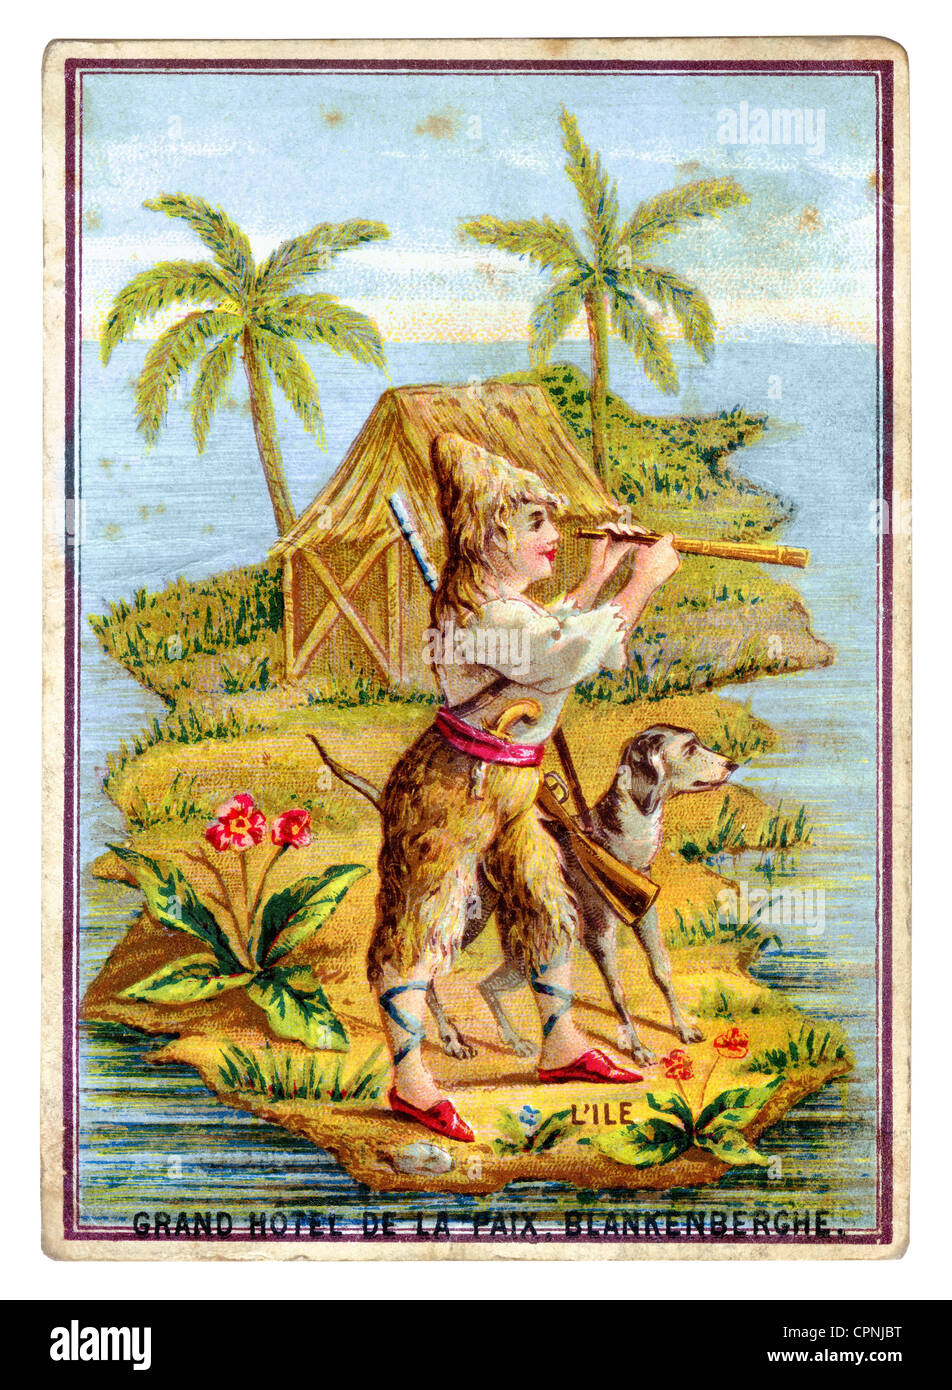 Defoe, Daniel, ca. 1660 - 26.4.1731, britischer Autor/Schriftsteller, Oevre, 'Robinson Crusoe', Werbebild des ehemaligen Grand Hotel de la Paix, Blankenberghe, lithograph, Belgien, ca. 1875, Stockfoto